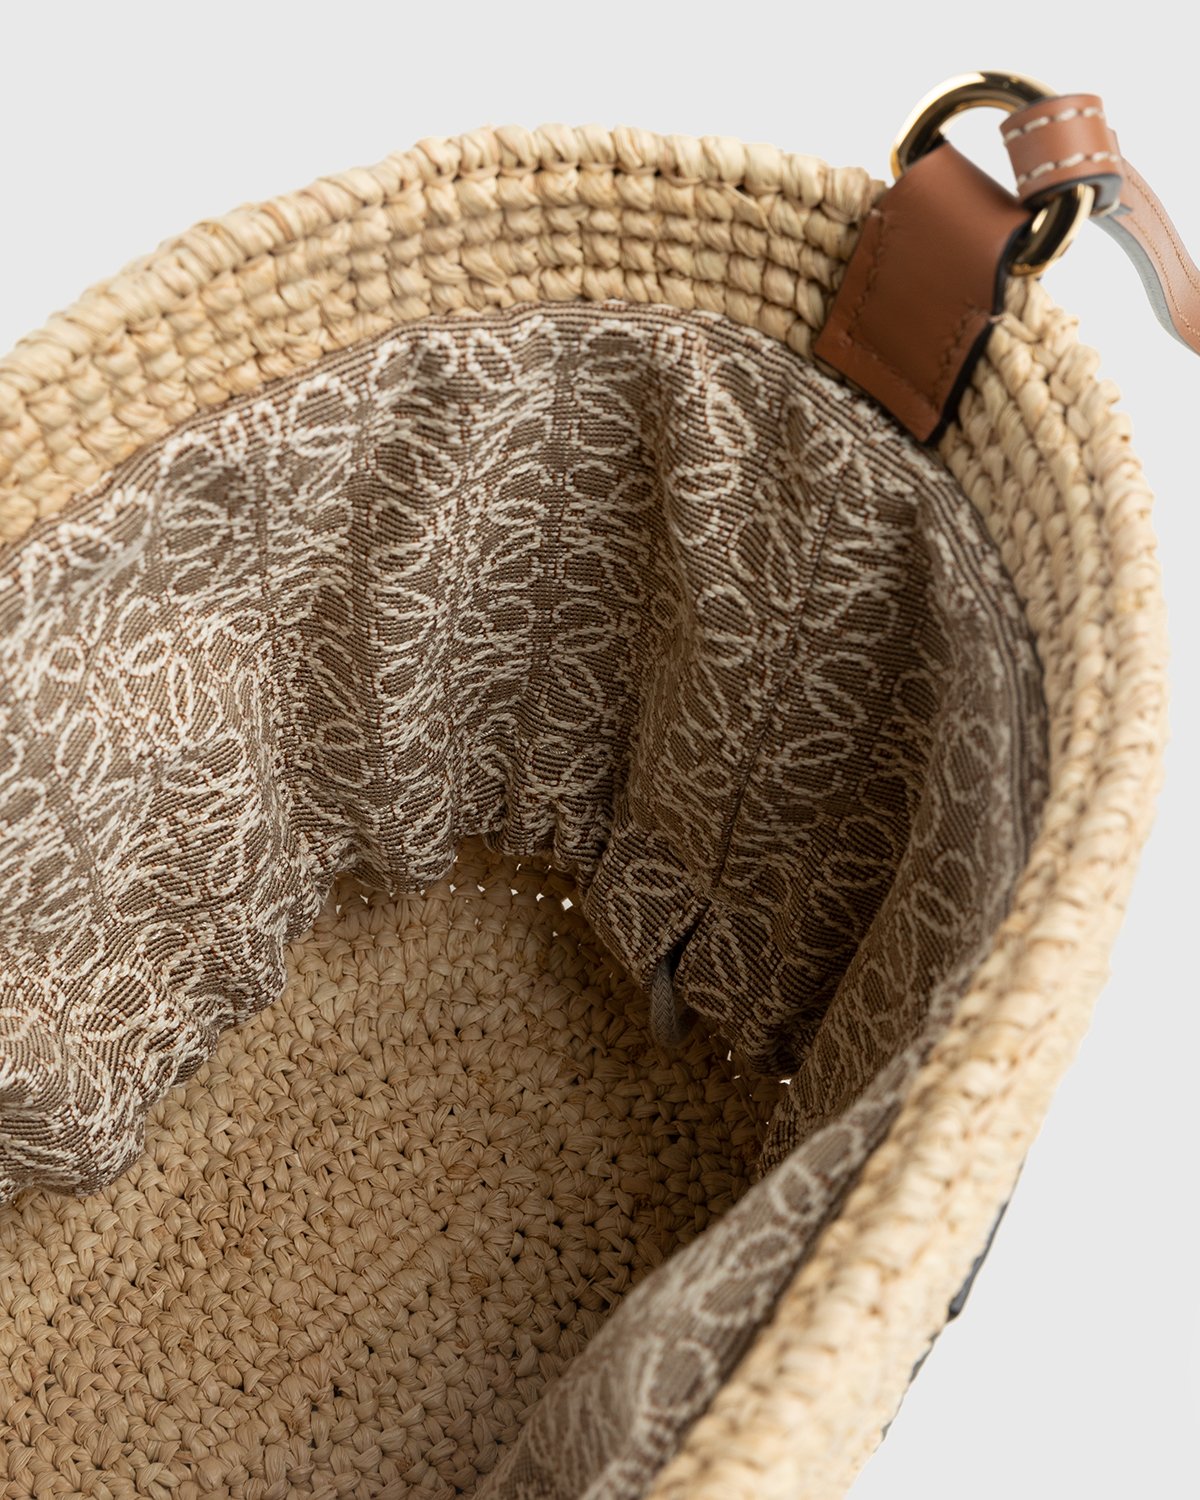 Loewe - Paula's Ibiza Pochette Anagram Basket Bag Natural/Tan - Accessories - Beige - Image 5